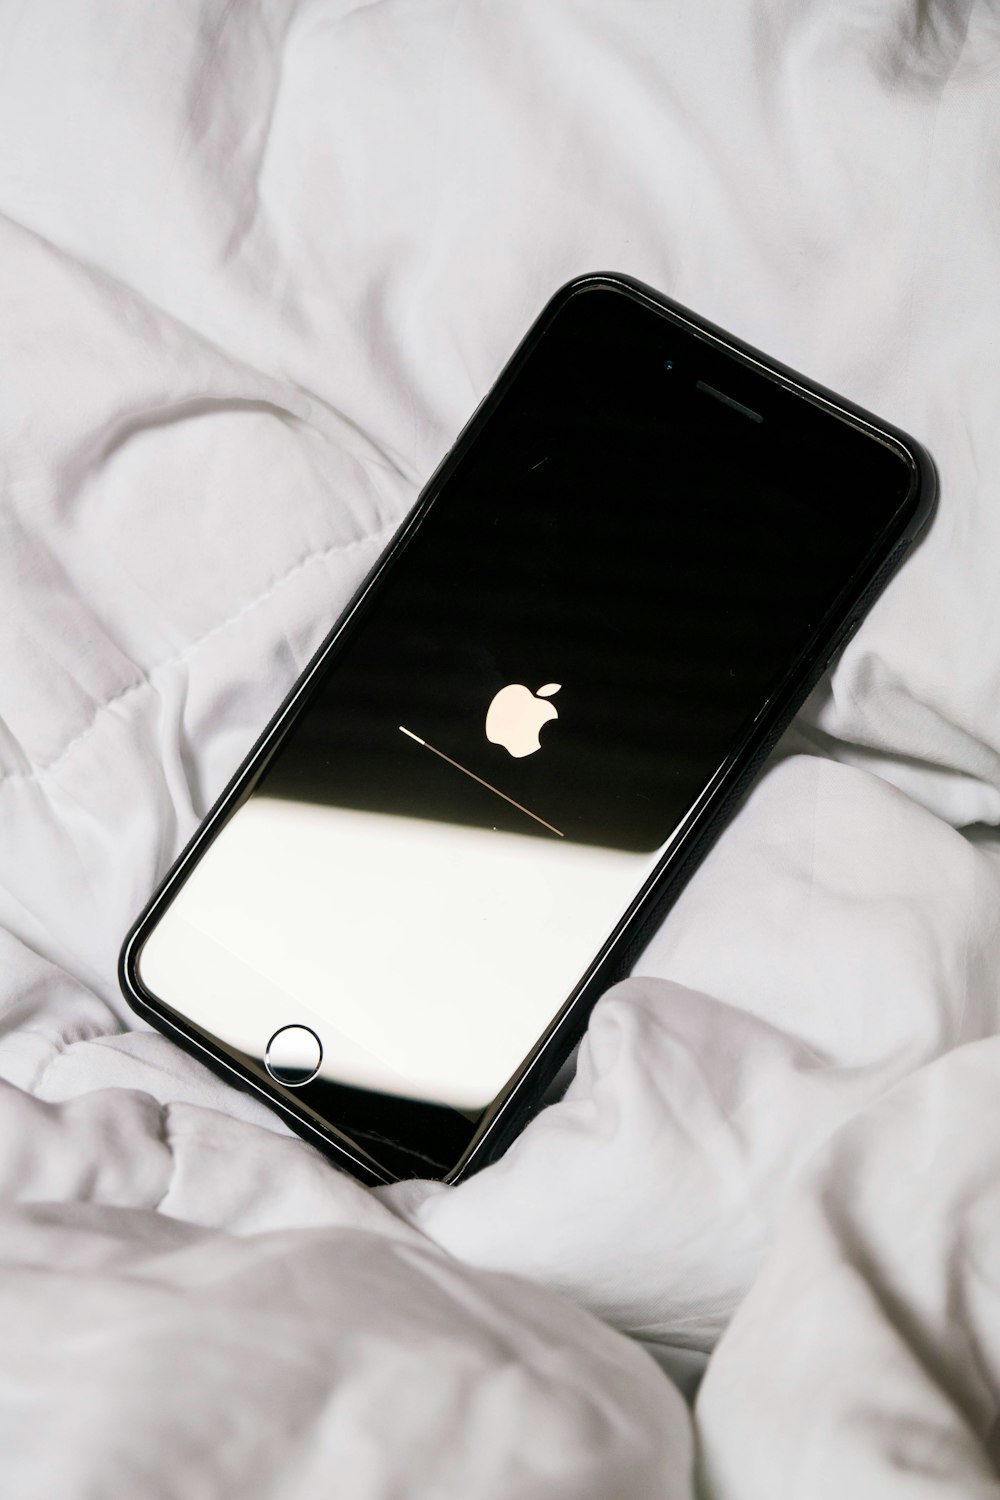 turned-off black iPhone